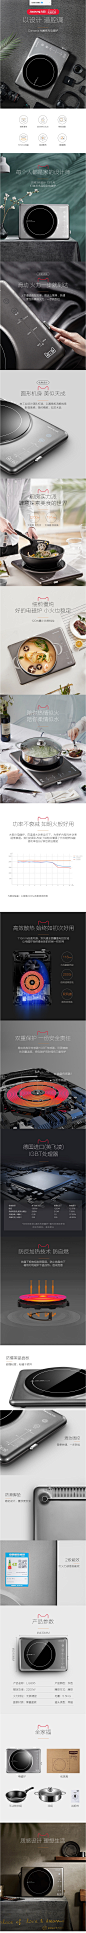 Joyoung/九阳 C22-LG806电磁炉大火力大功率家用电池炉电磁灶正品-tmall.com天猫